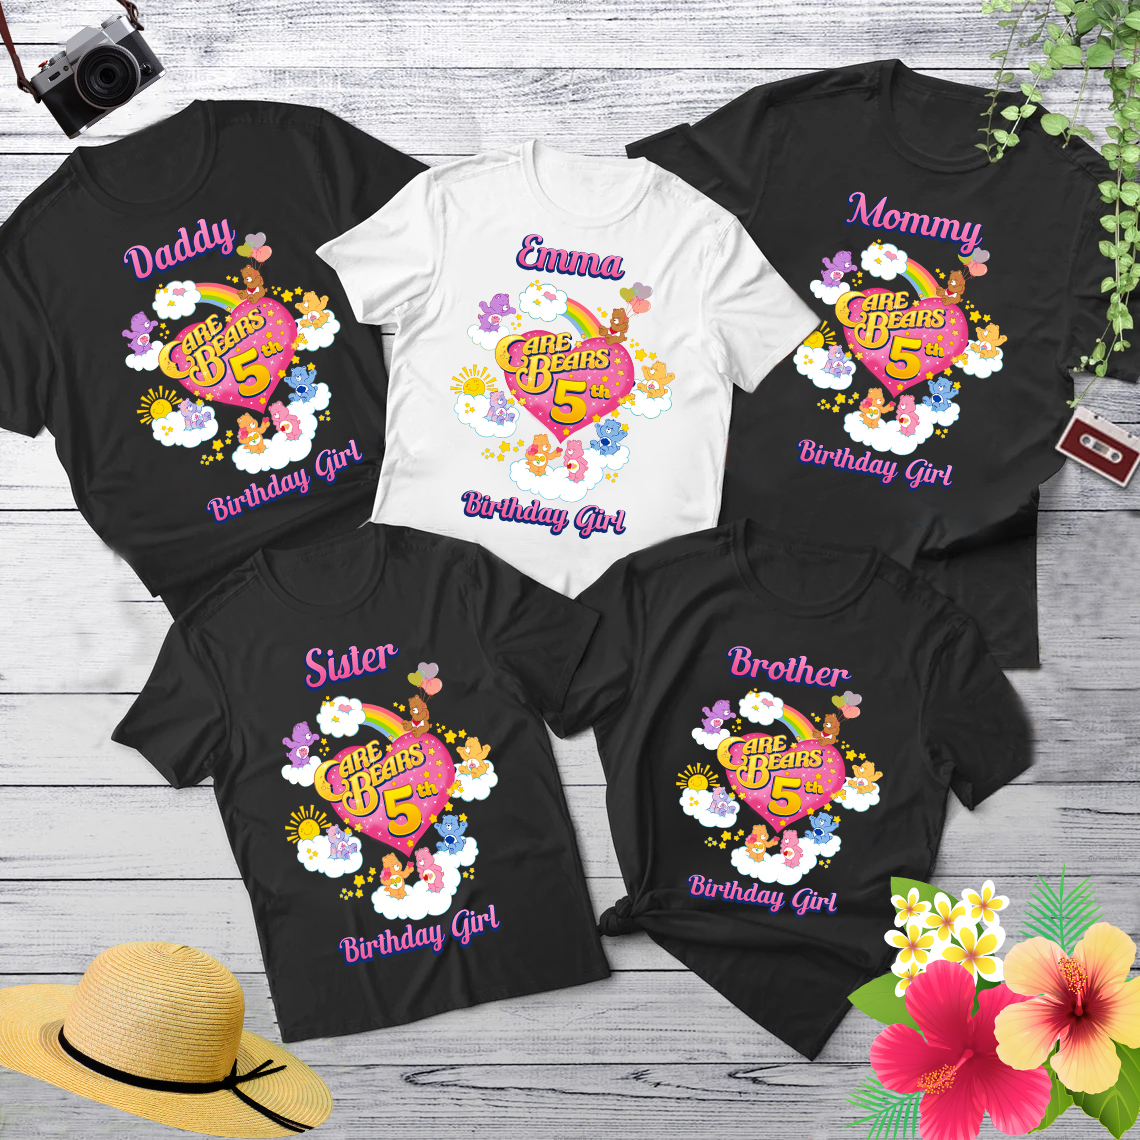 Personalized Care Bears shirt, care bear Birthday Shirt, Care Bears Family Matching Shirt, Care bear Groups shirt